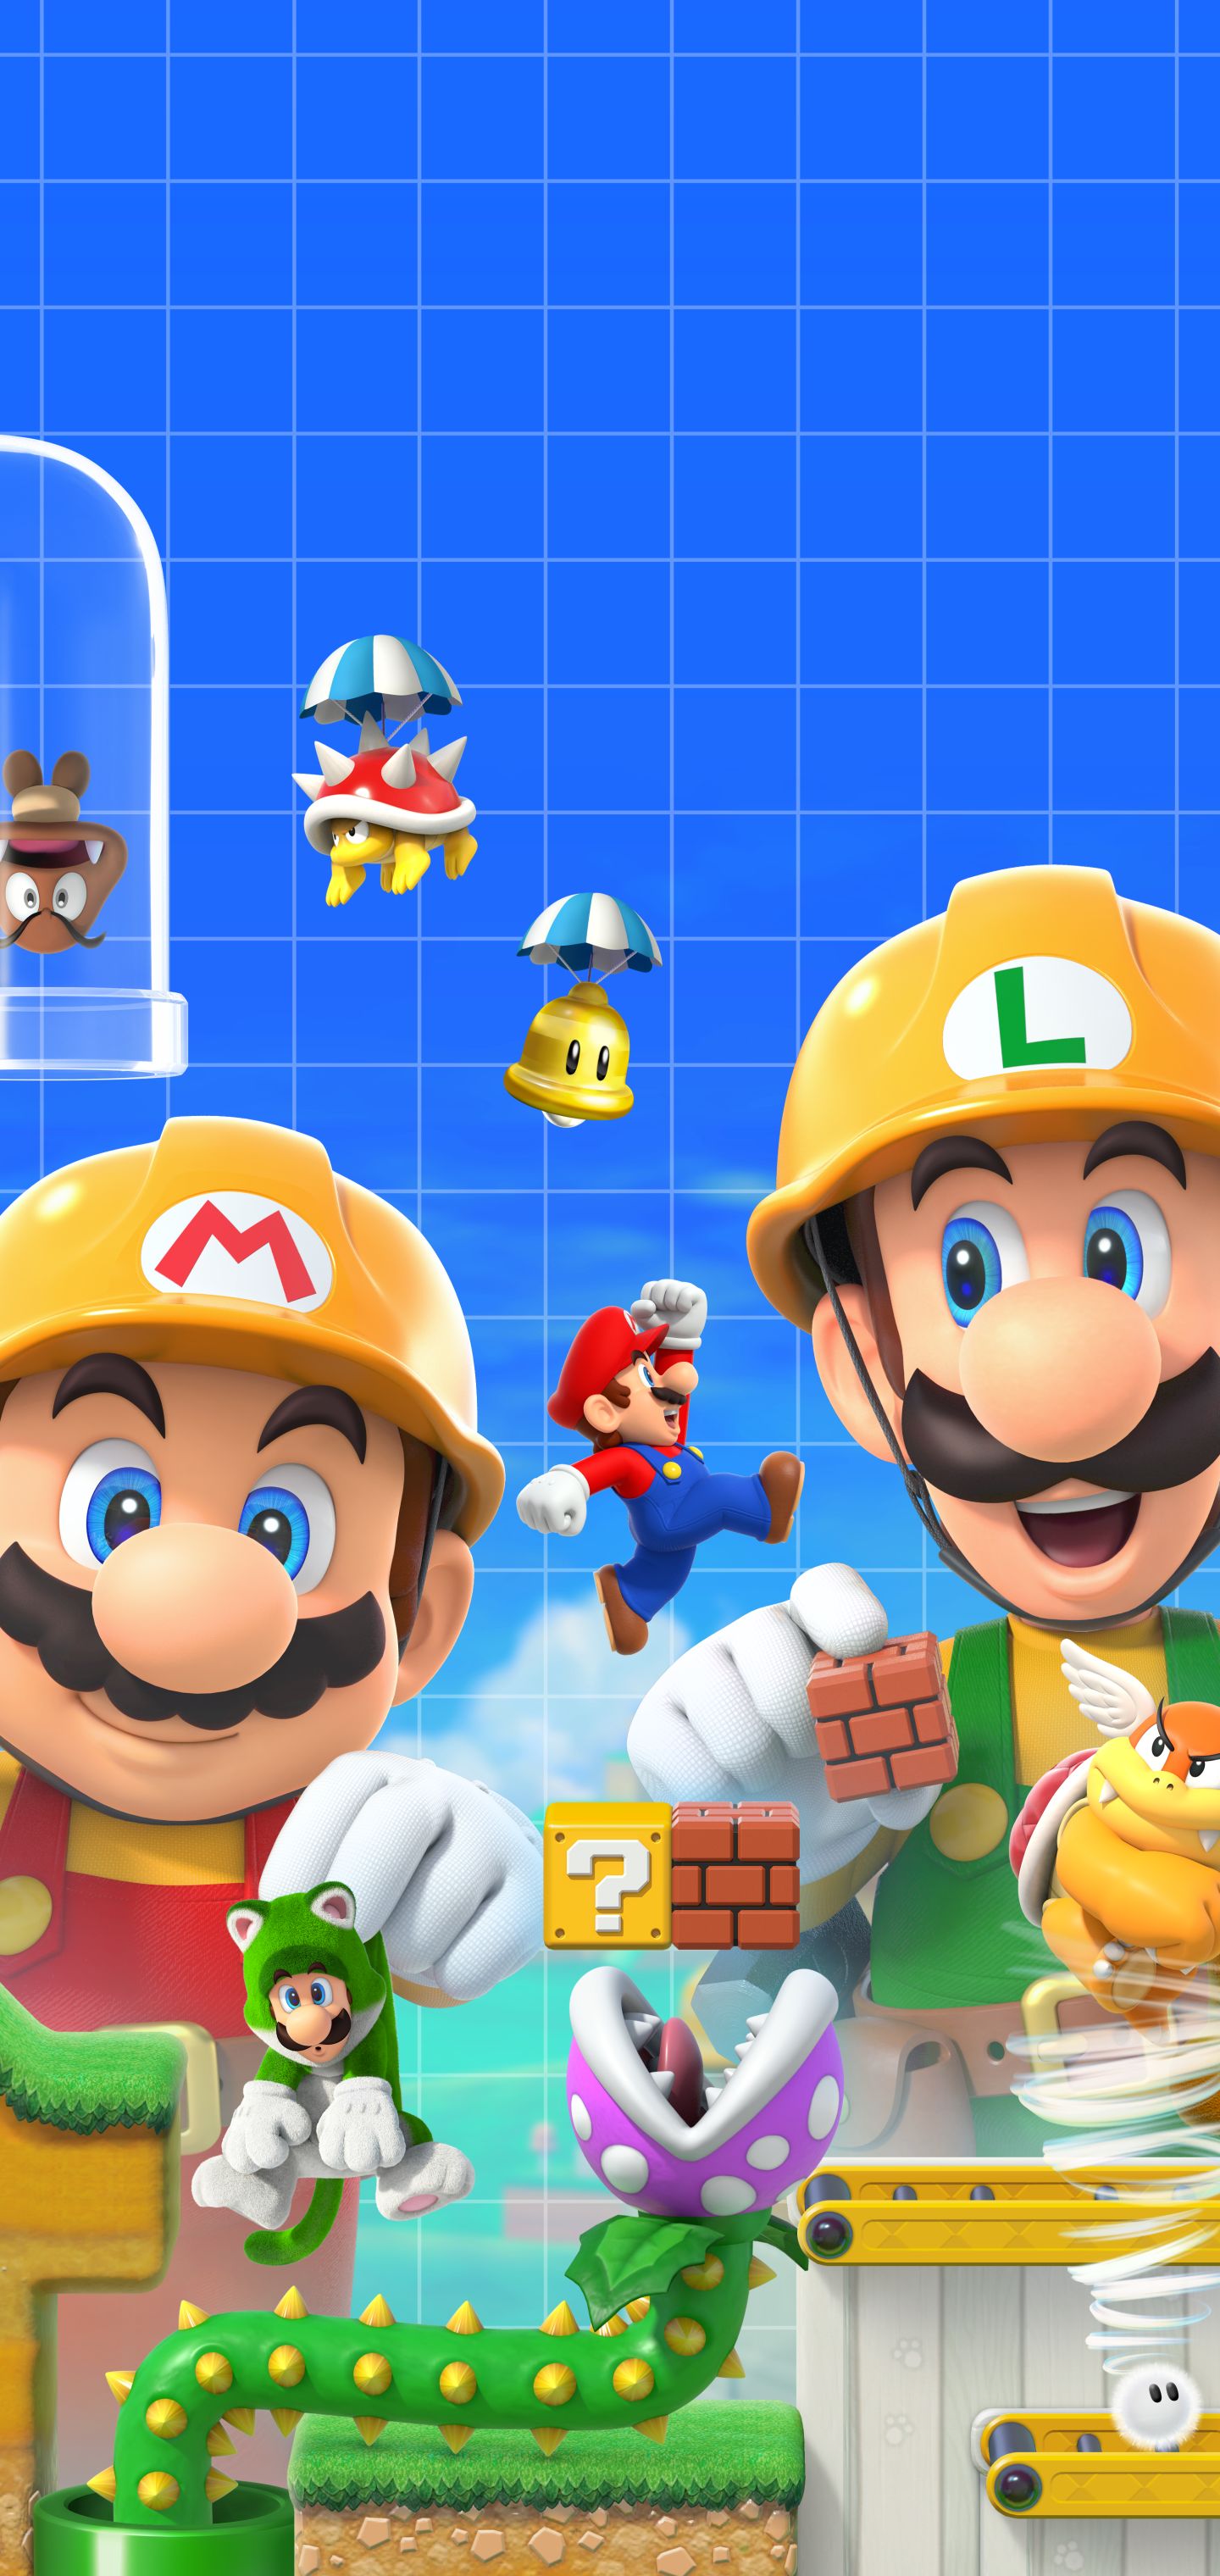 Завантажити шпалери Super Mario Maker 2 на телефон безкоштовно